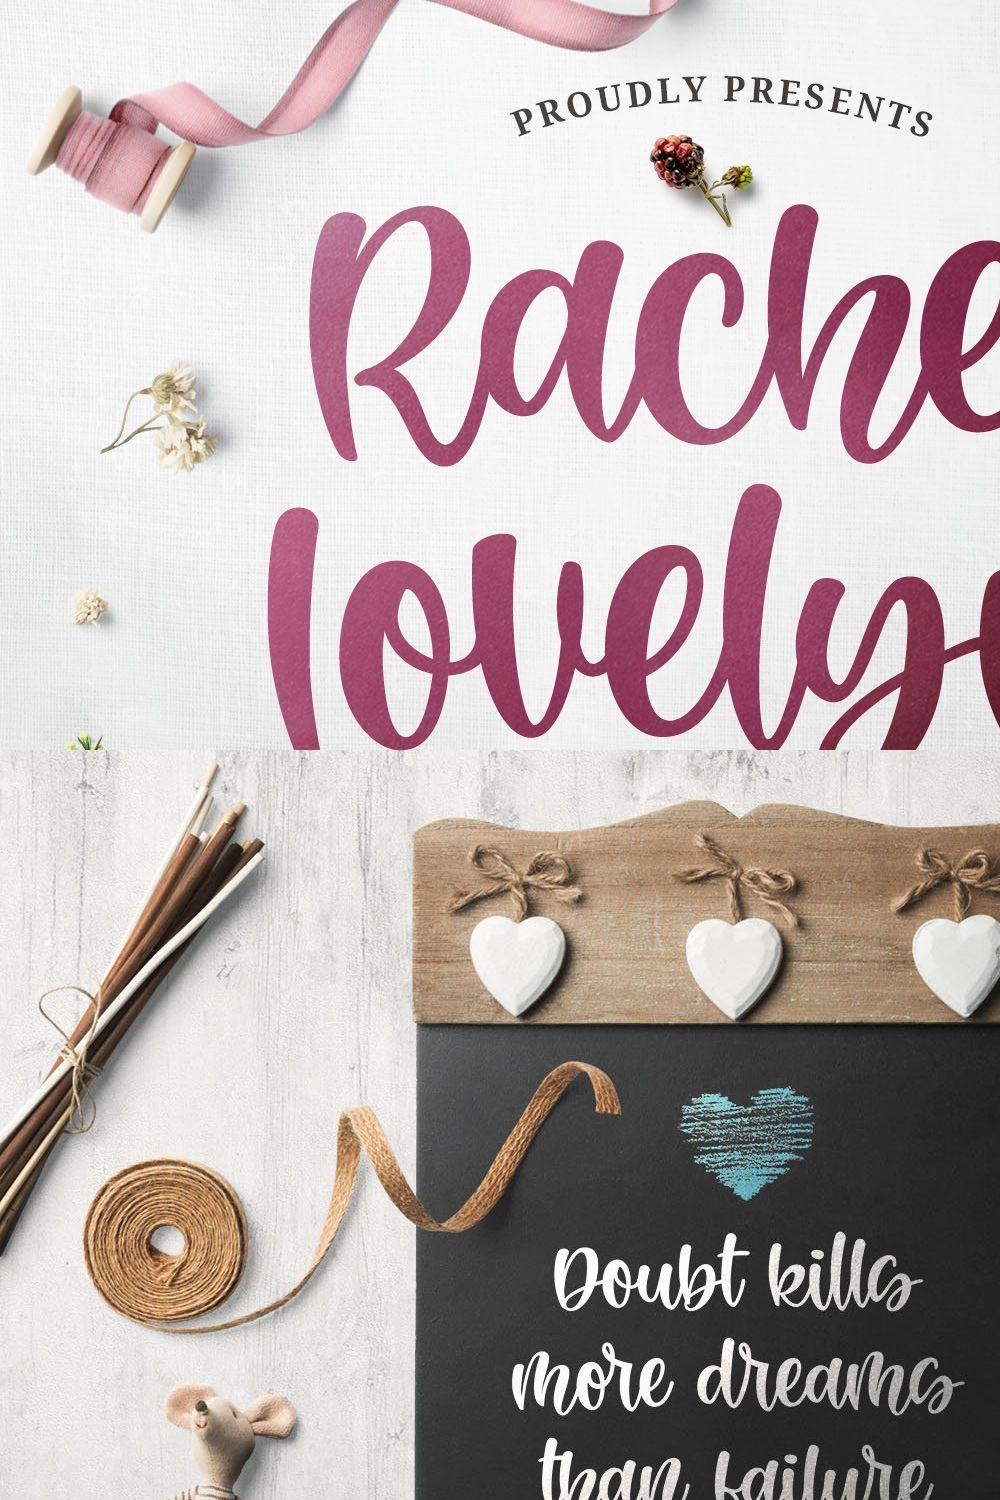 Rachel Lovelyn - Beautiful Script pinterest preview image.